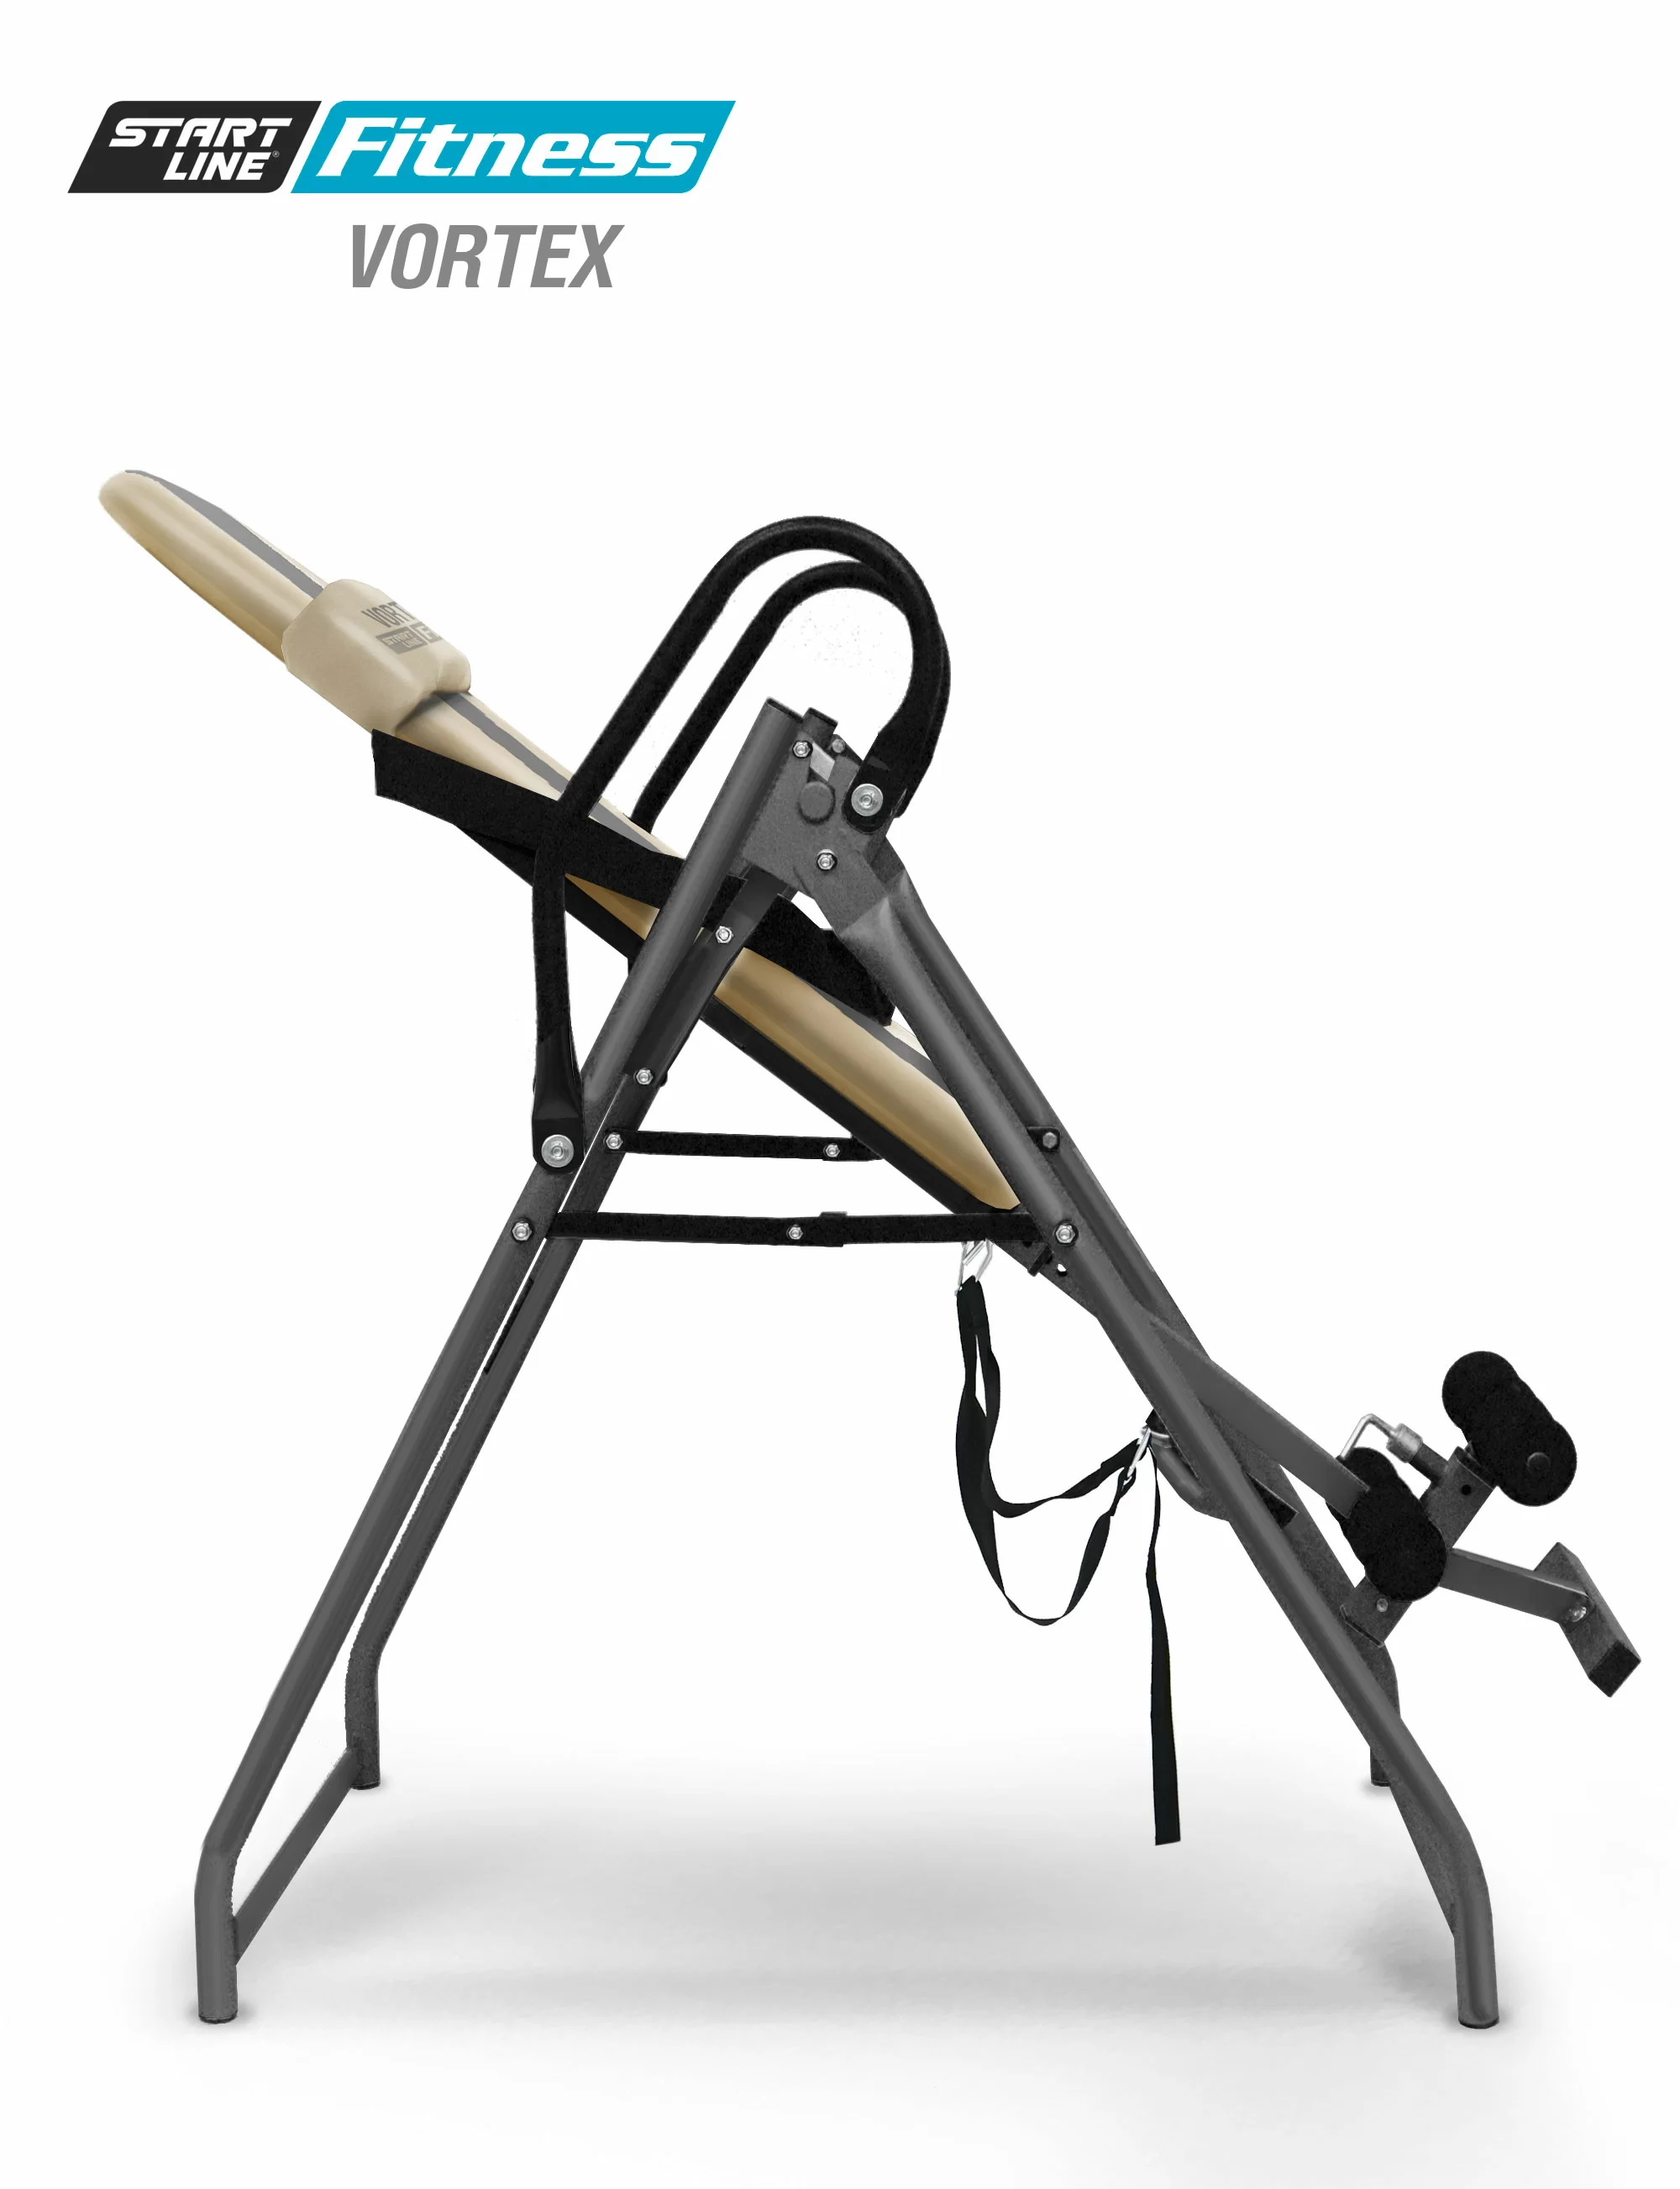 Фото Инверсионный стол Vortex бежево-серый c подушкой SLFIT03-BS со склада магазина СпортСЕ